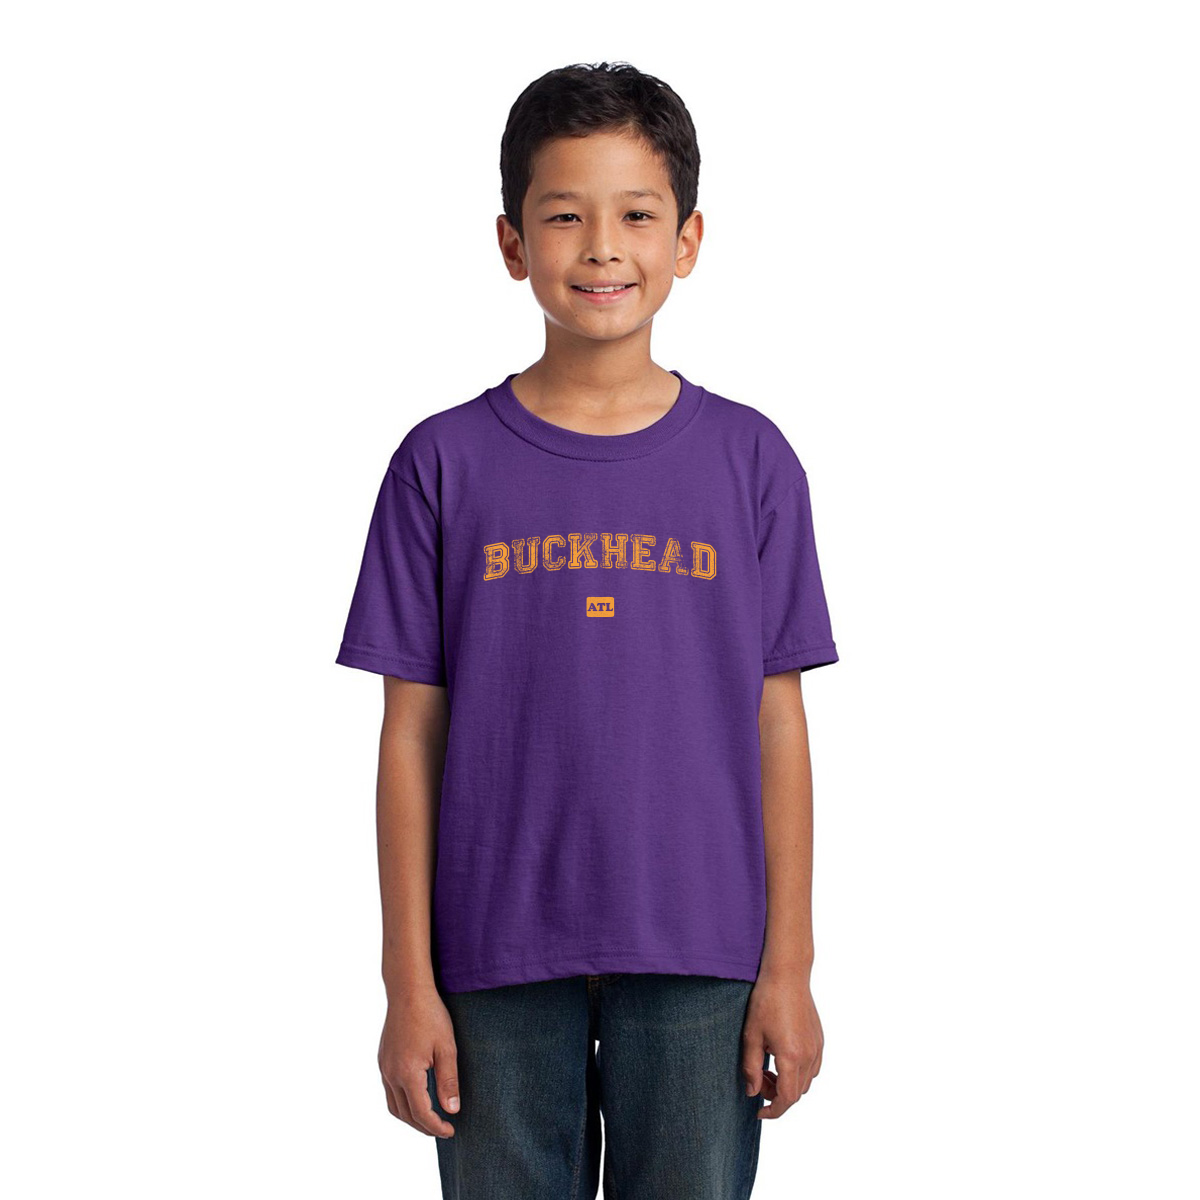 Buckhead ATL Represent Kids T-shirt | Purple